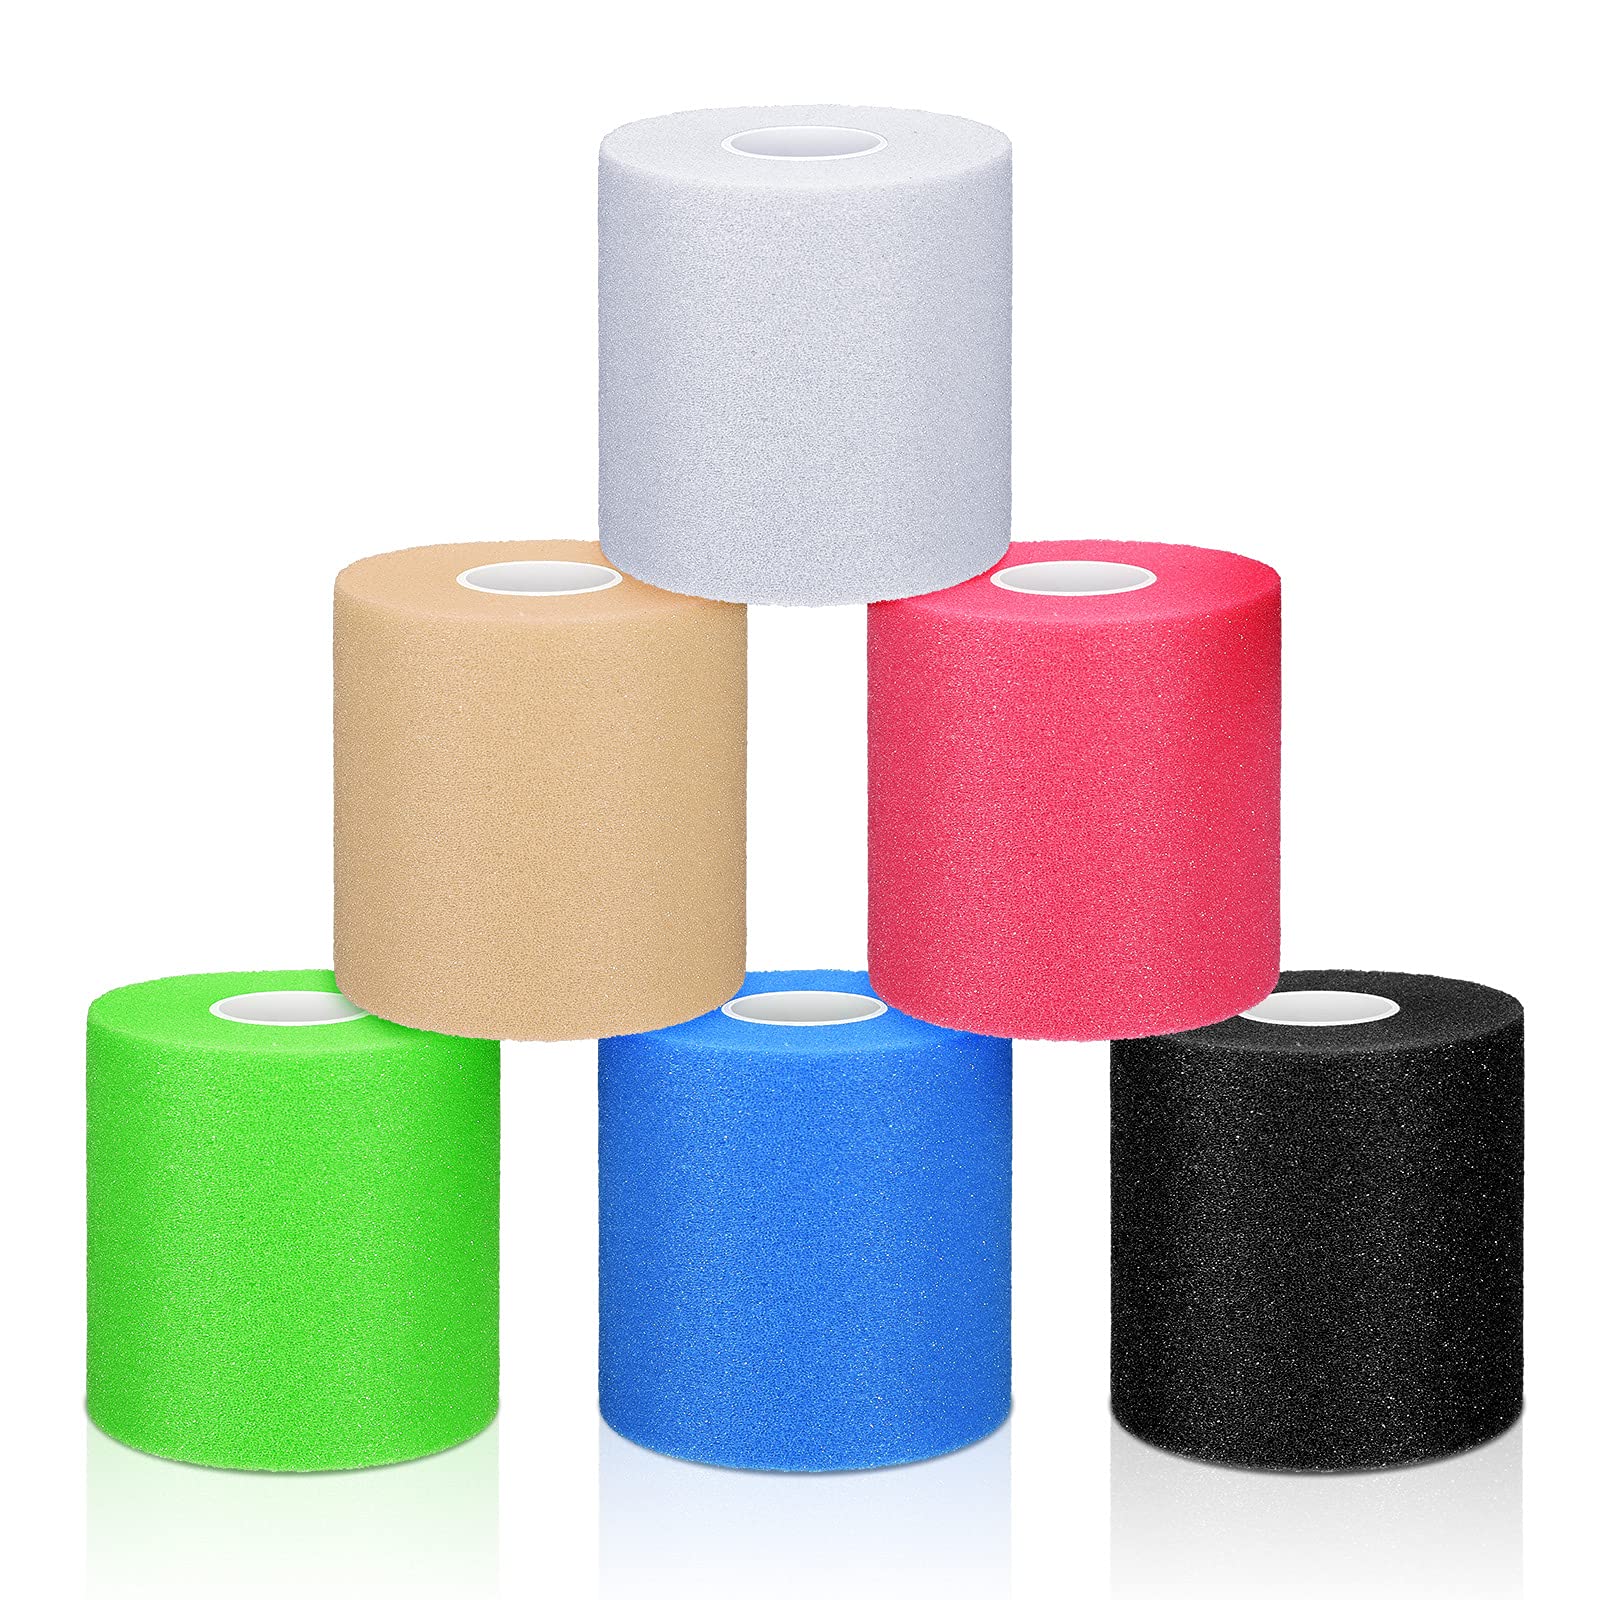 Pre-Wrap Underwrap Foam Tape Rolls in Lots of Bright Colors & Team Colors -  Wristbands / HeadbandsArmbands / Ionic Sport